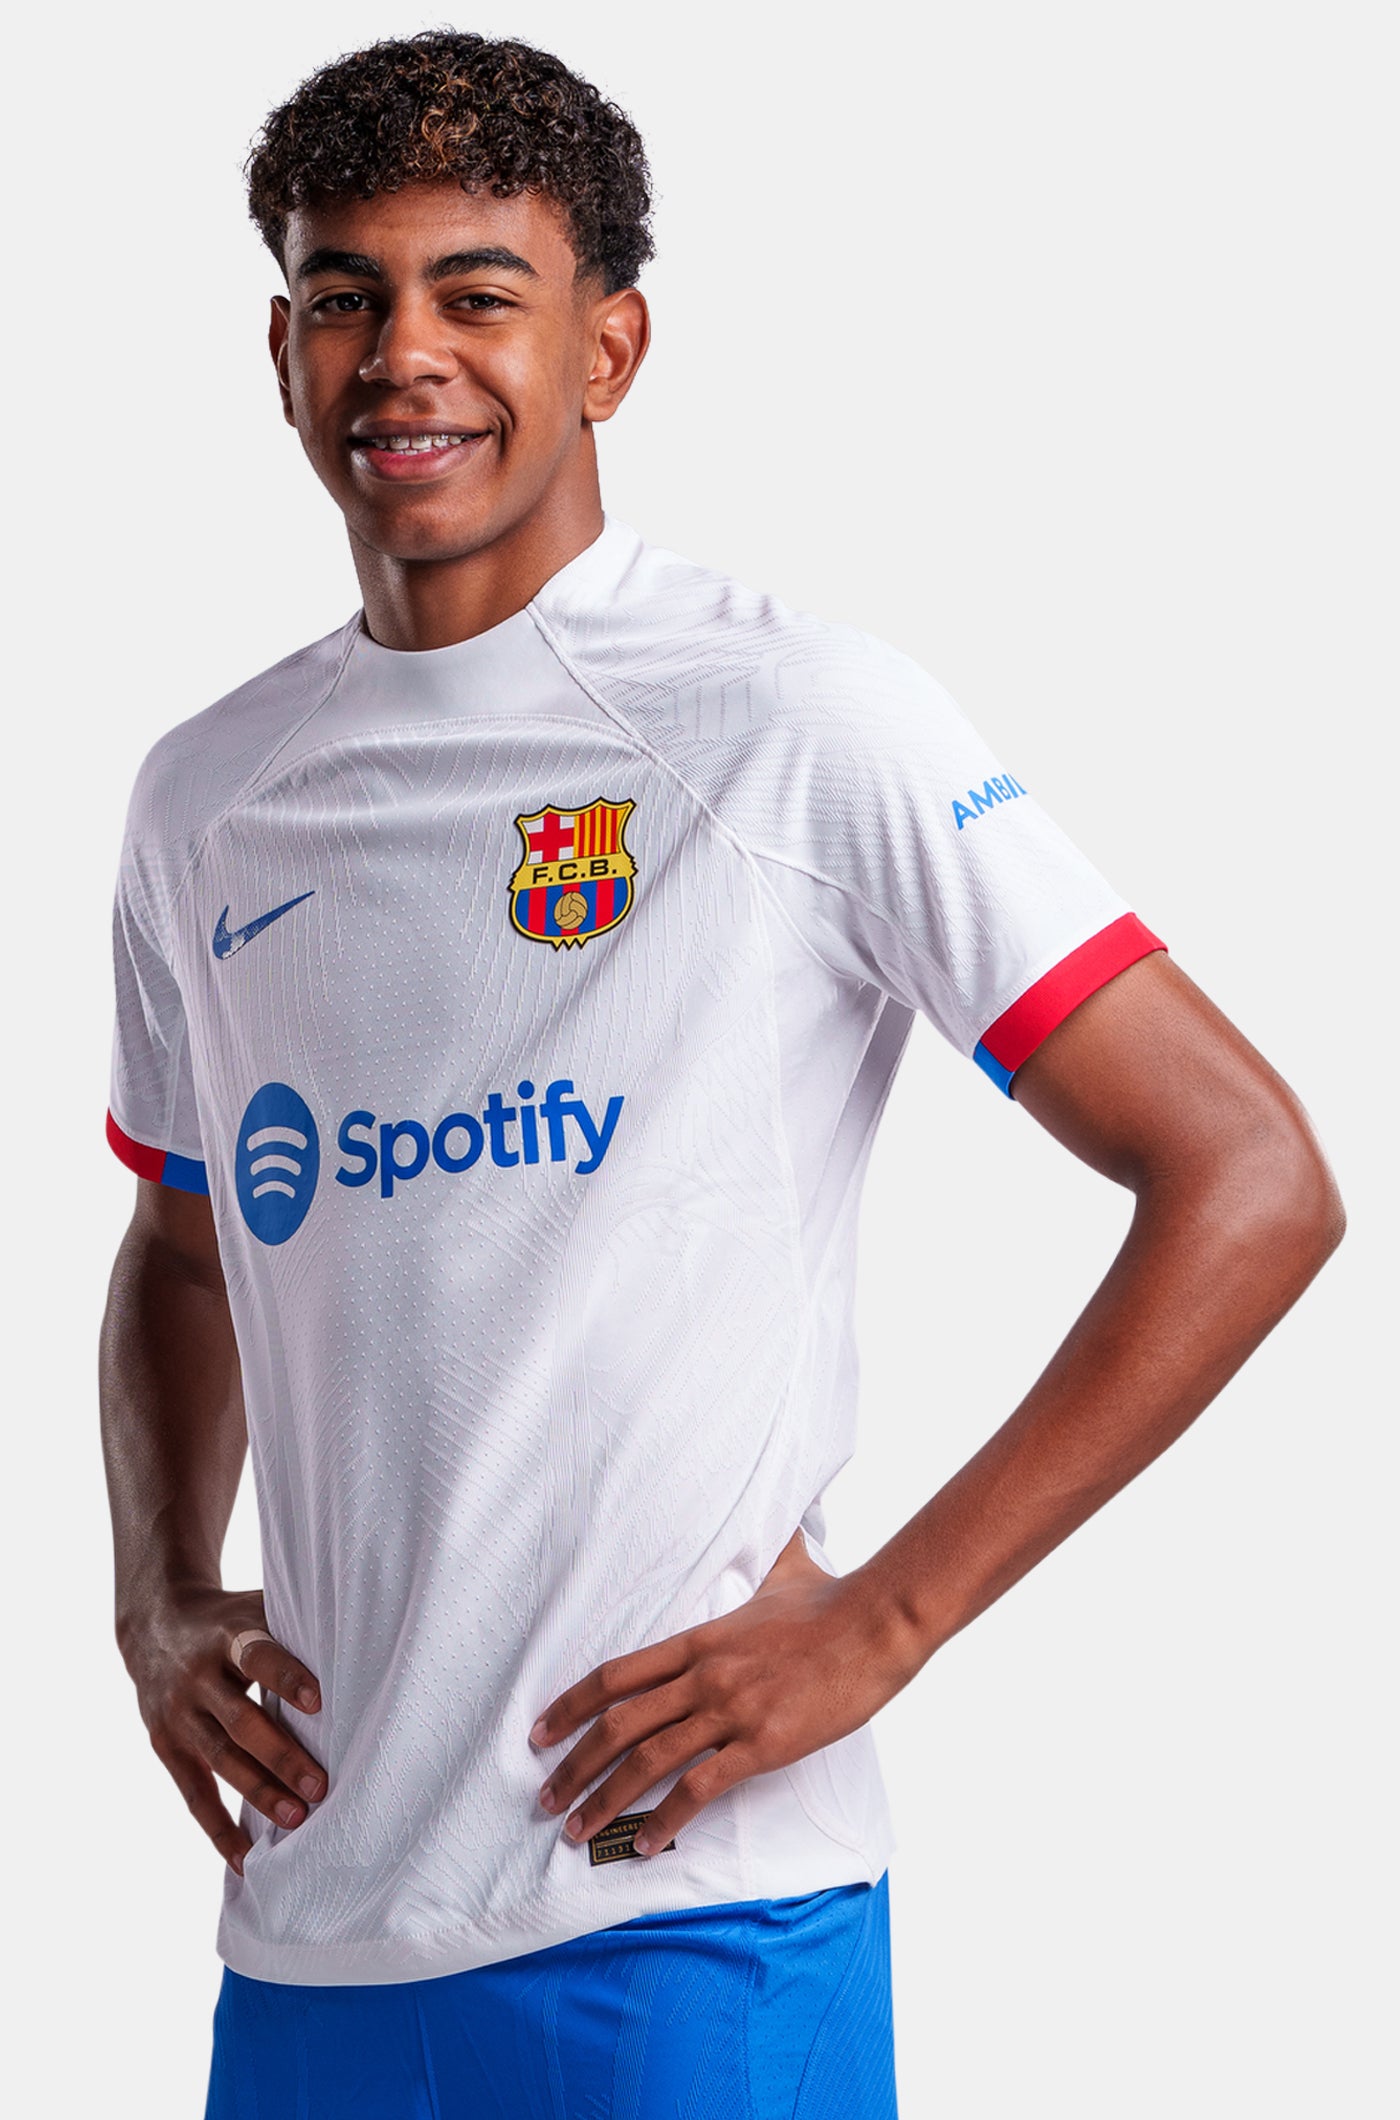 UCL FC Barcelona away shirt 23/24 Player’s Edition - LAMINE YAMAL